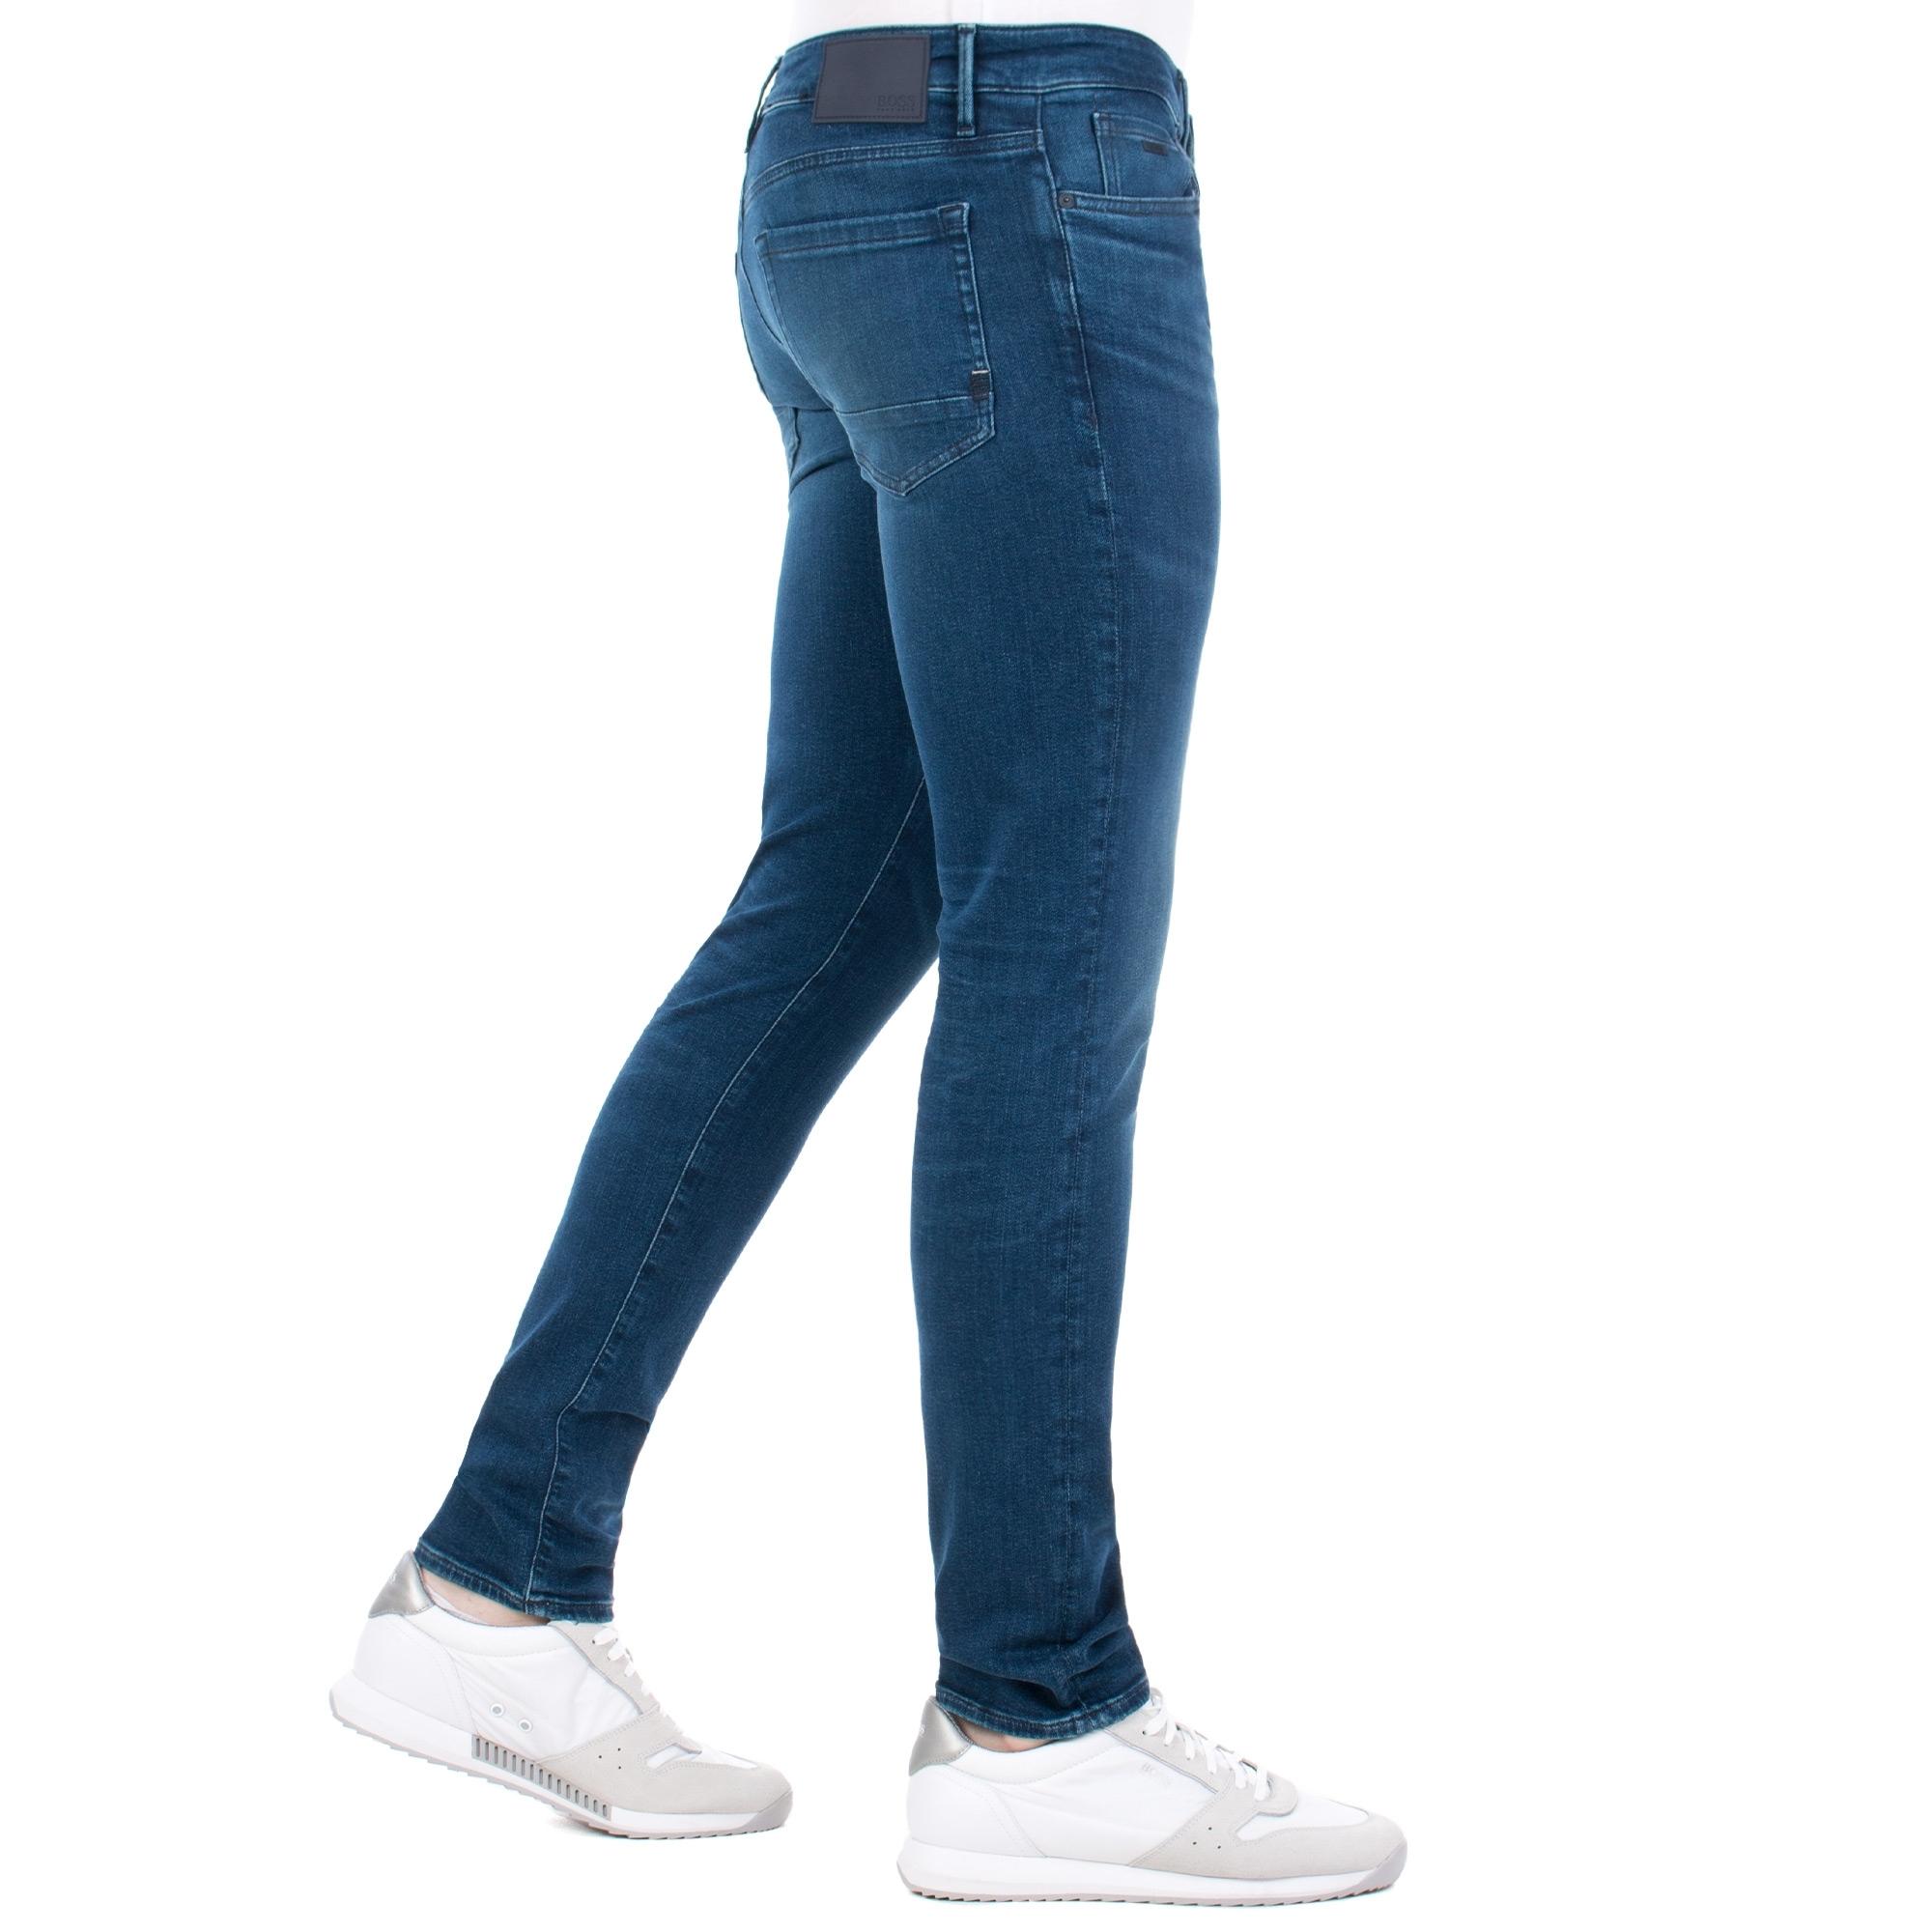 hugo boss charleston 3 jeans